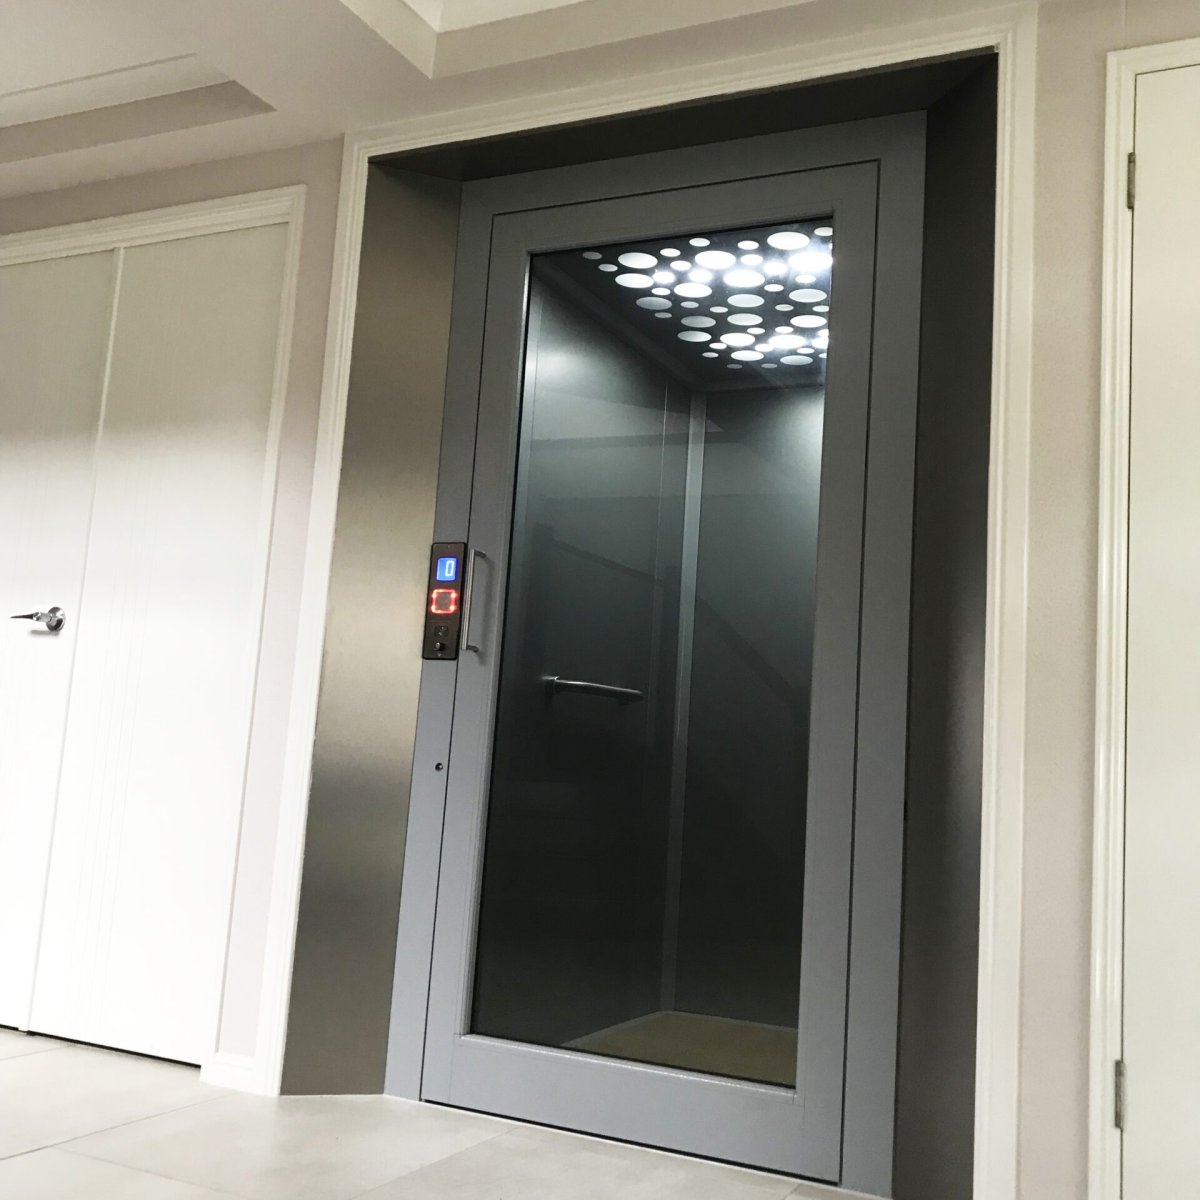  Easy Move Home Lift | Simplex Elevators Gallery Image 7